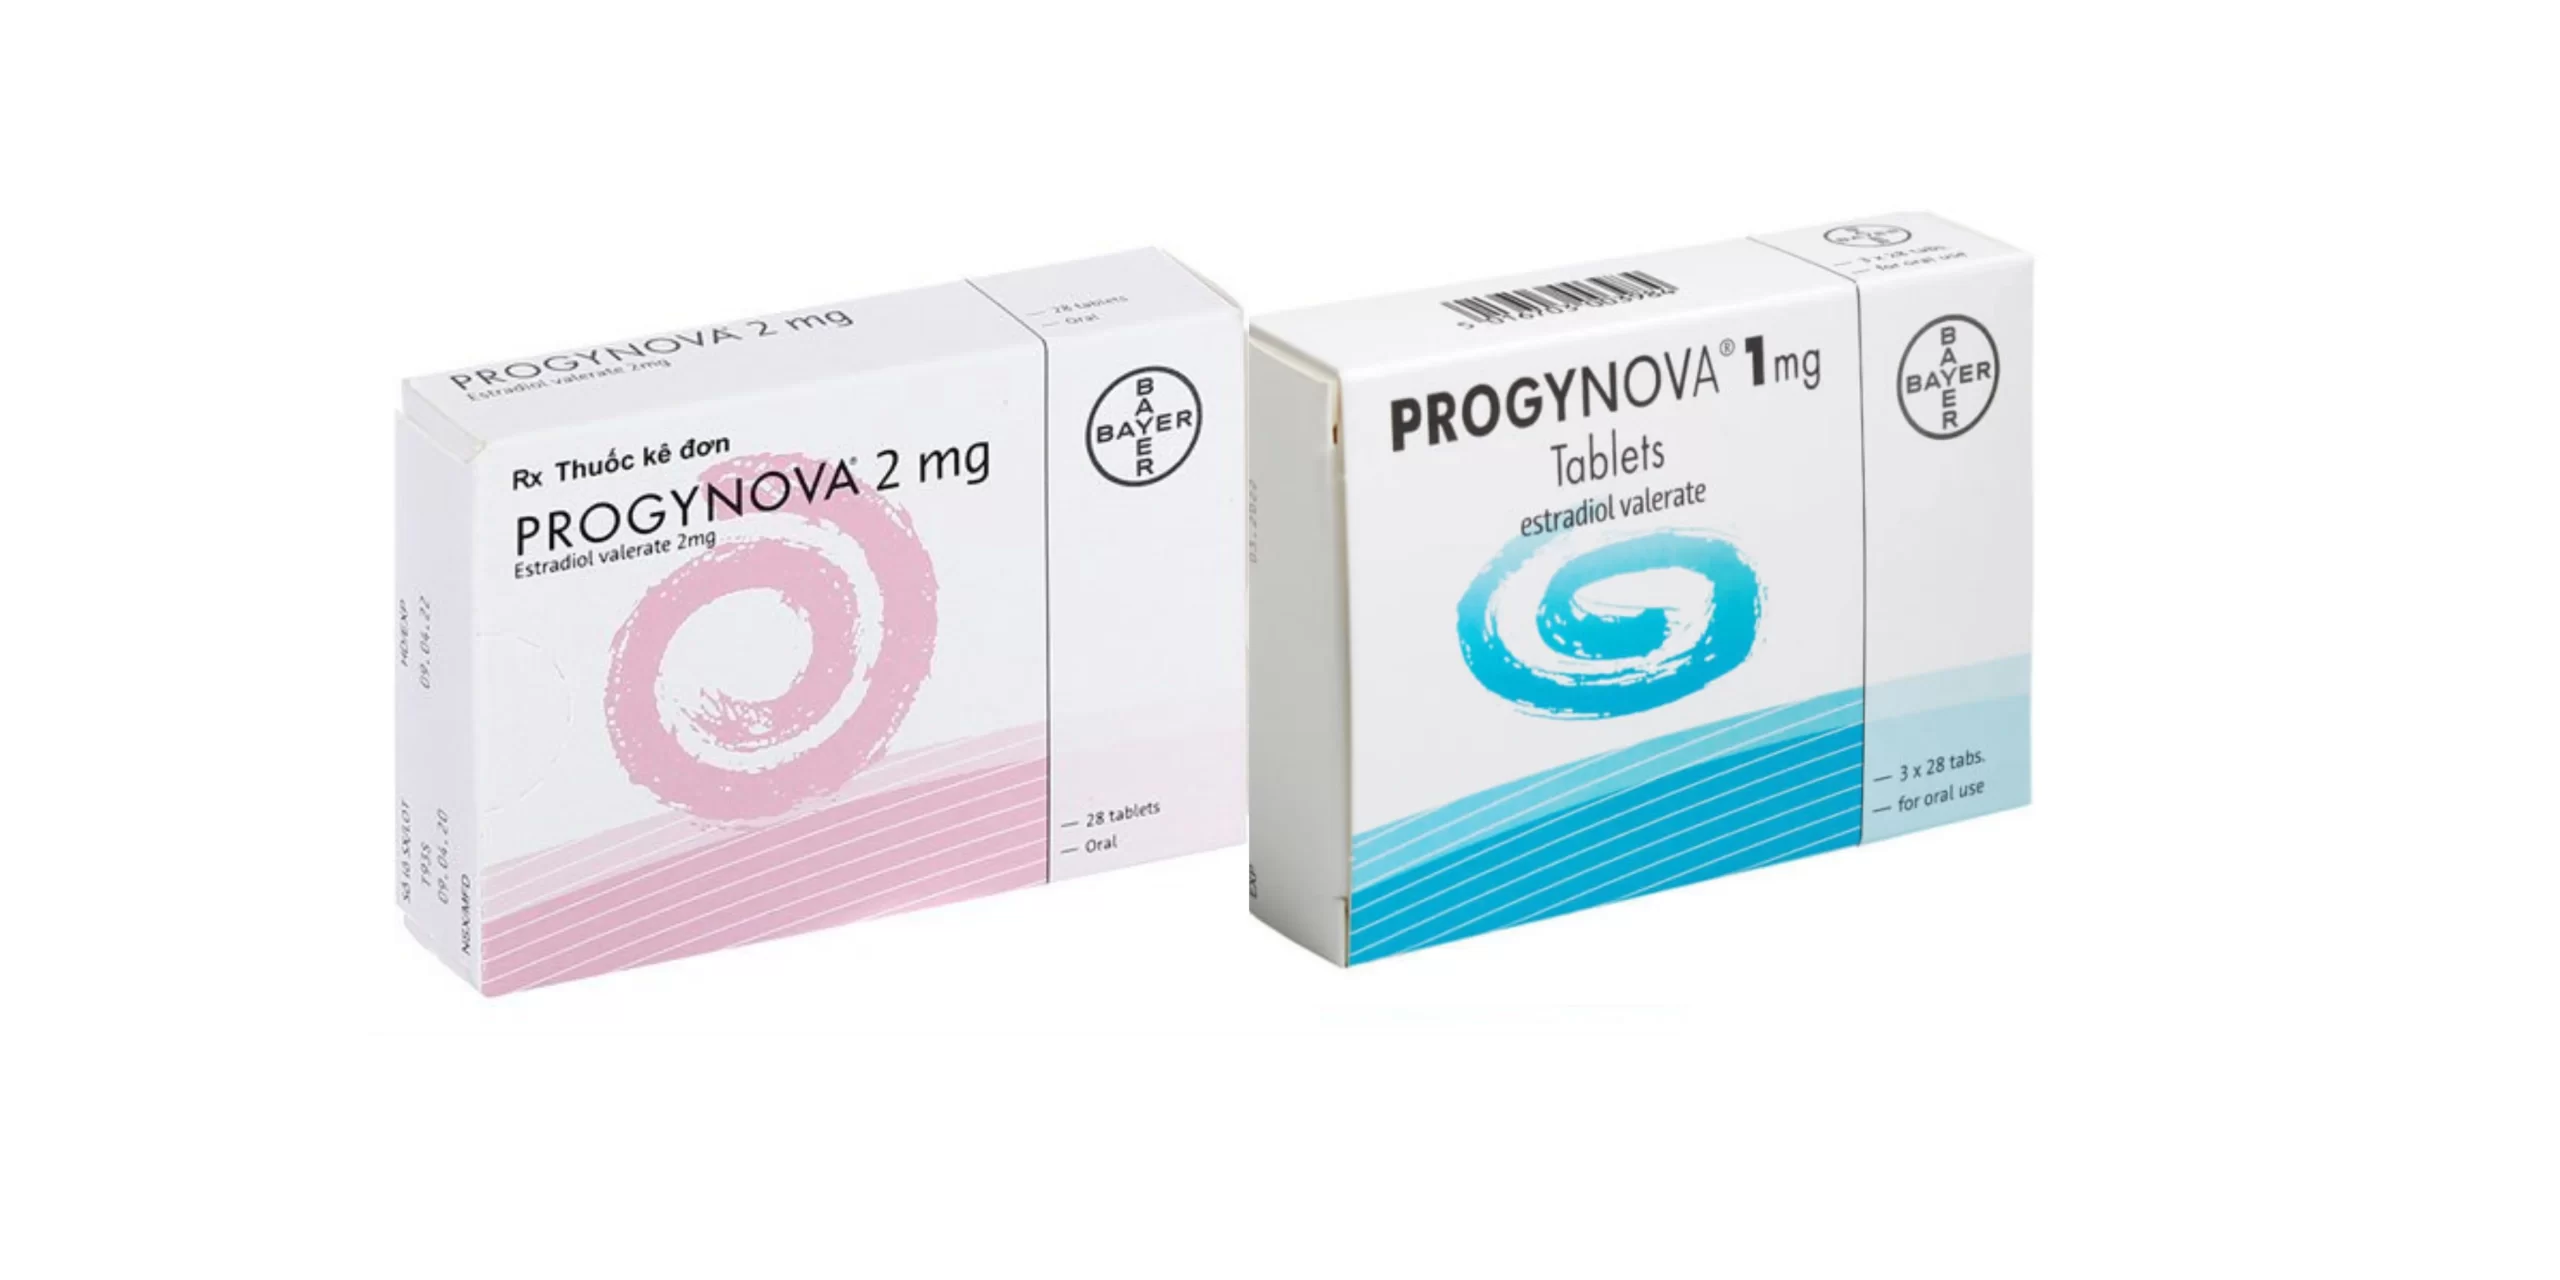 Can Progynova Be Used To Regulate Irregular Menstrual Cycles?